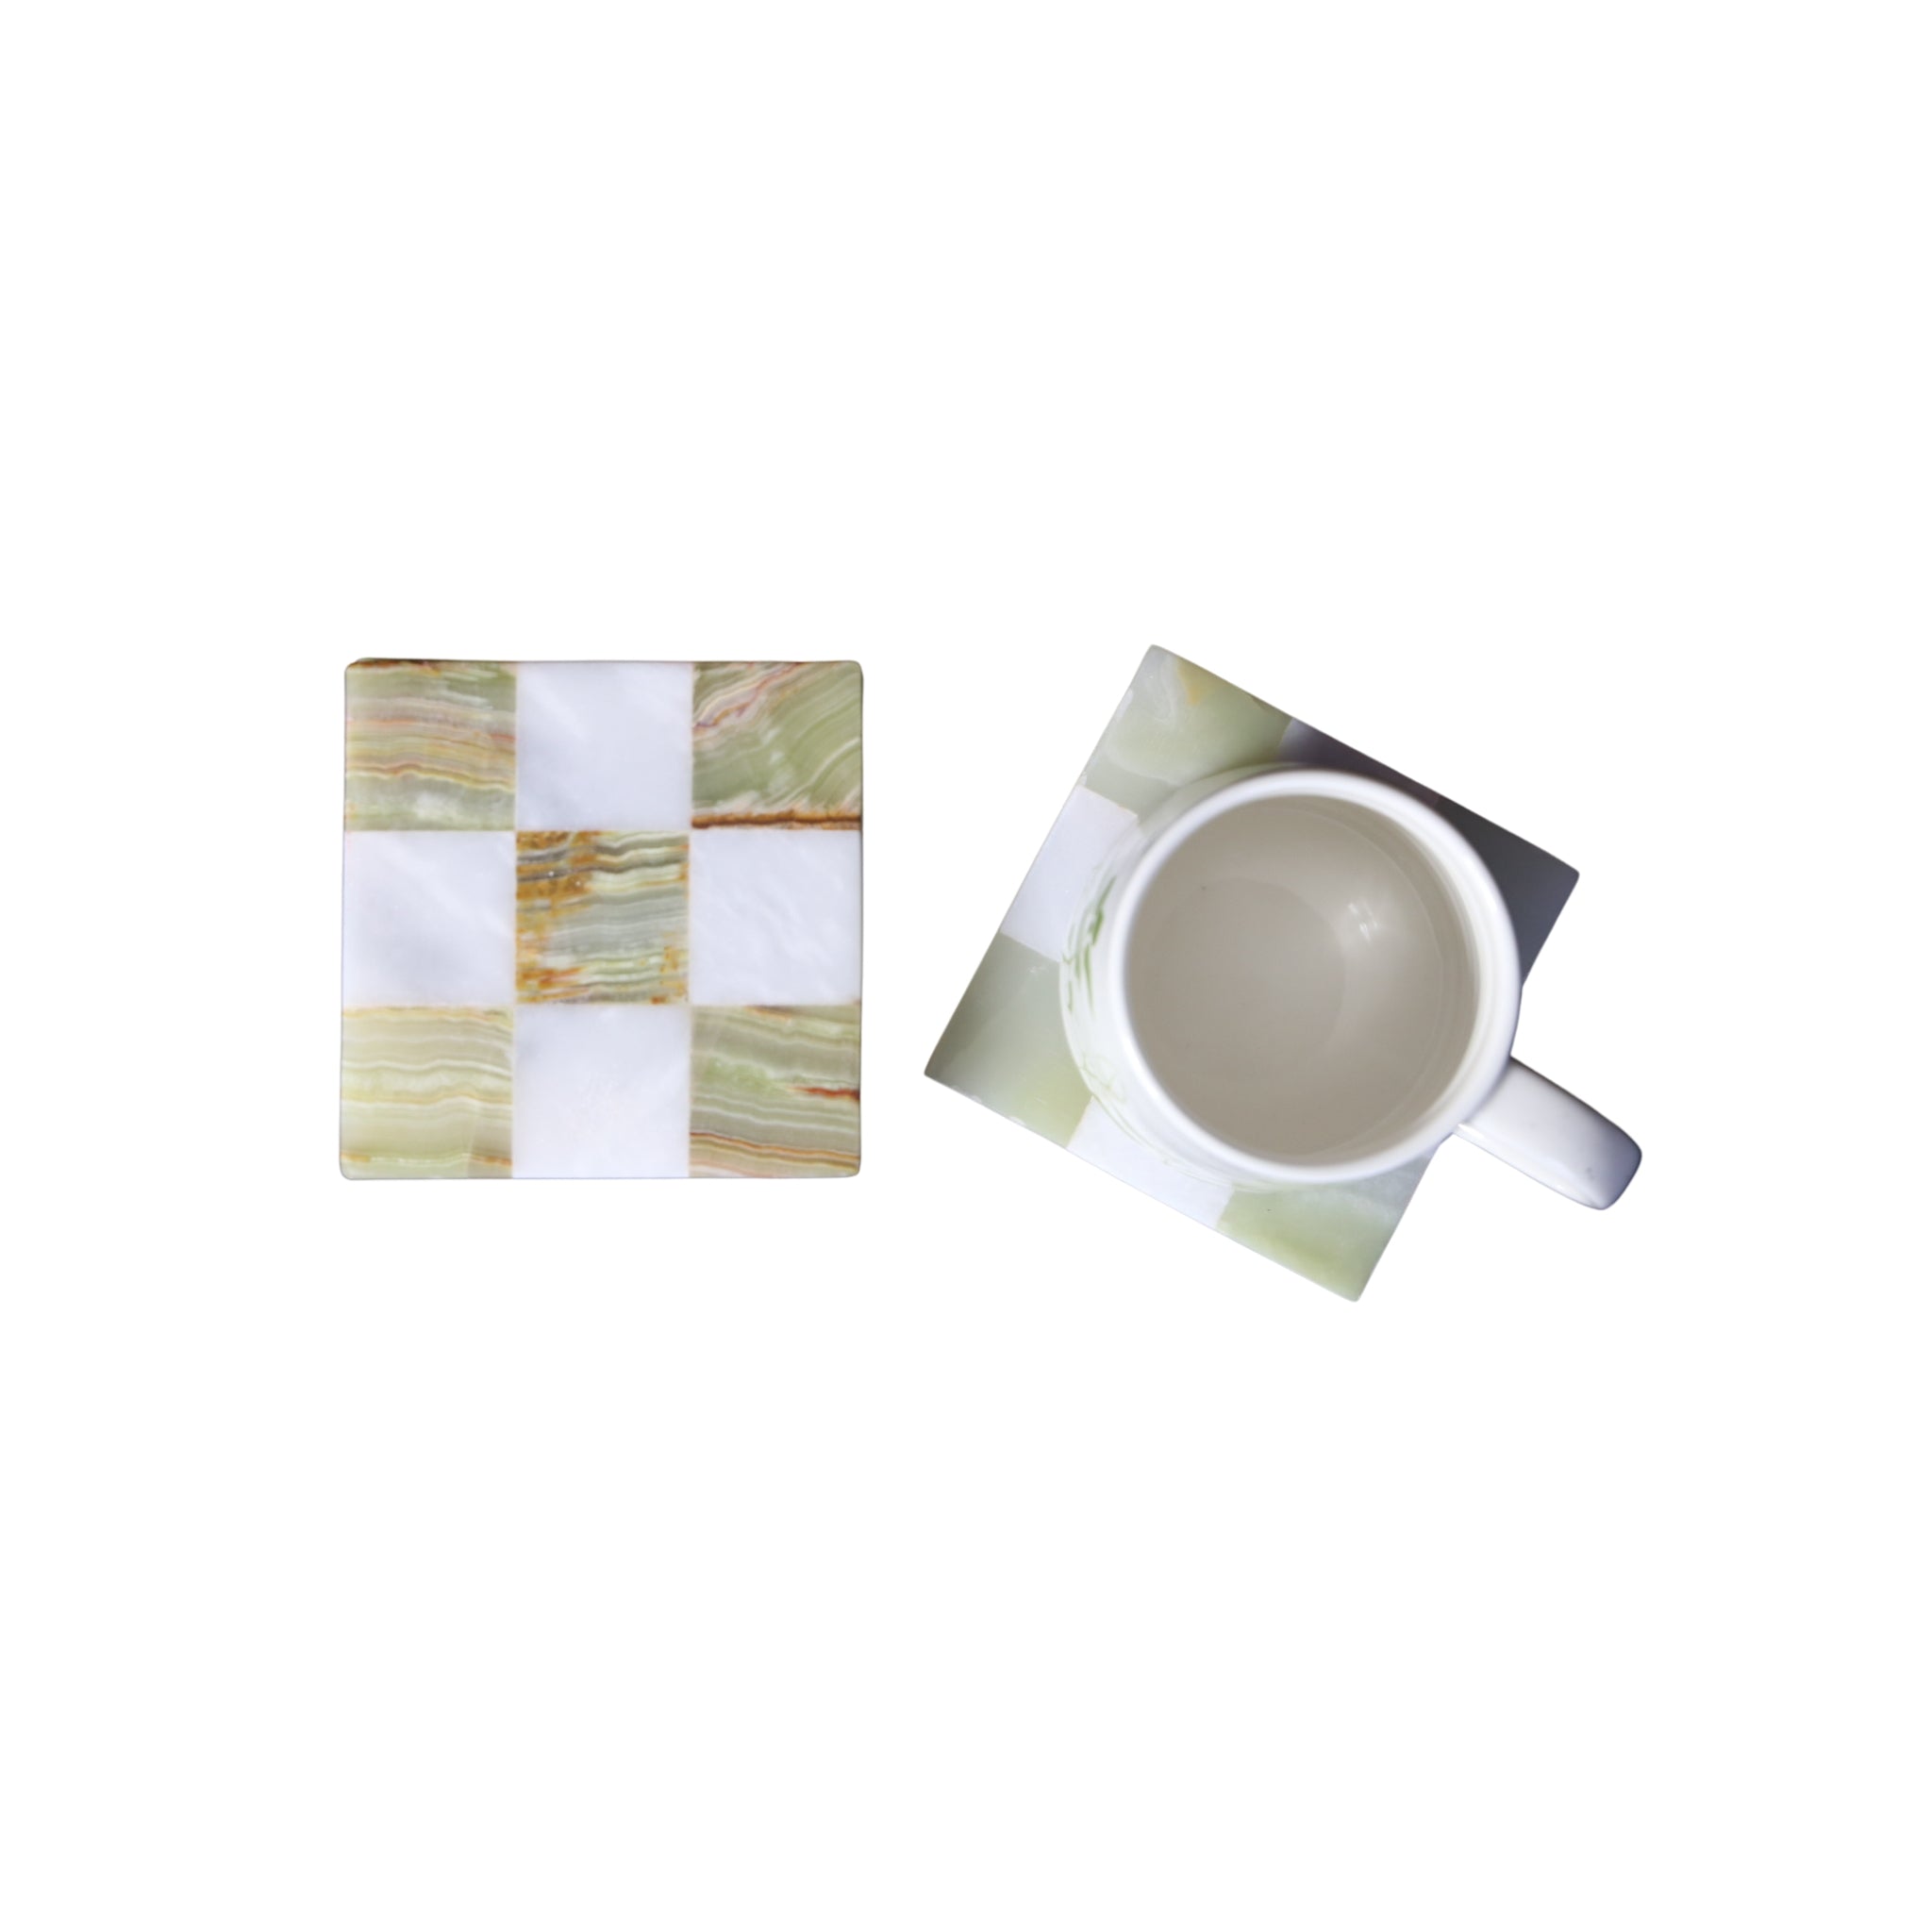 Onyx Marble Tea Coasters - Square Check (Set of 6)